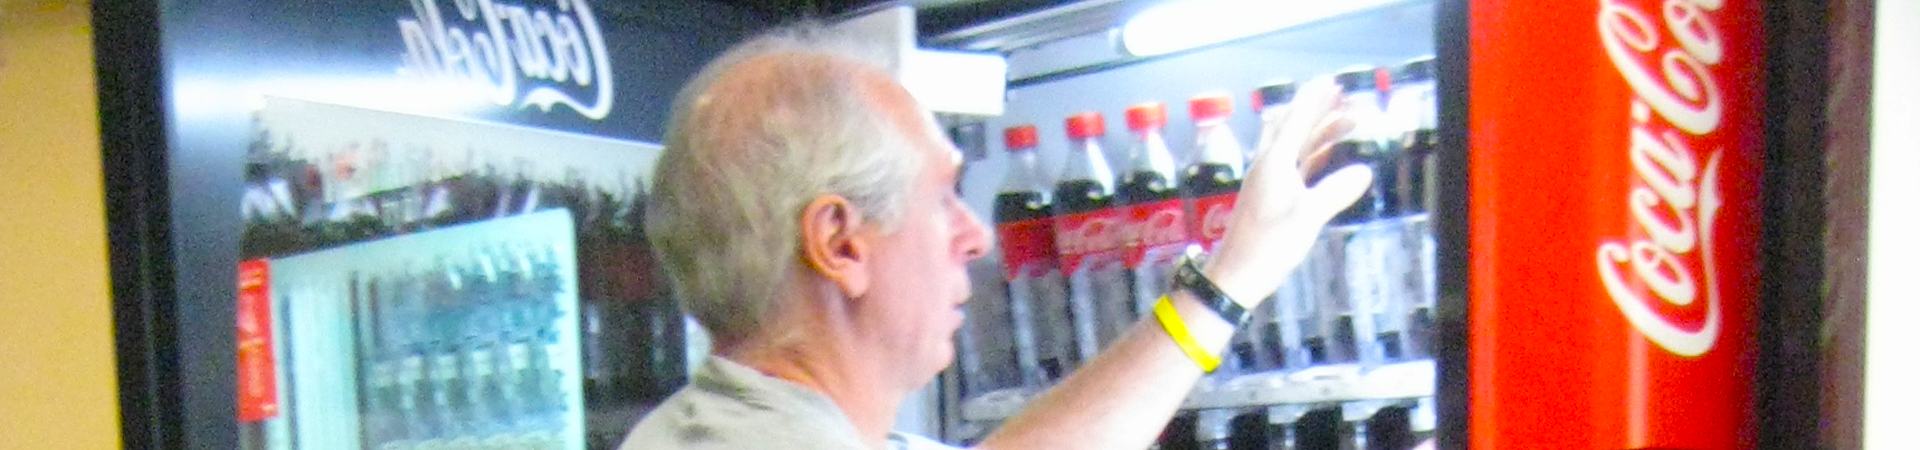 A close up of a man restocking an open vending machine of coca-cola.